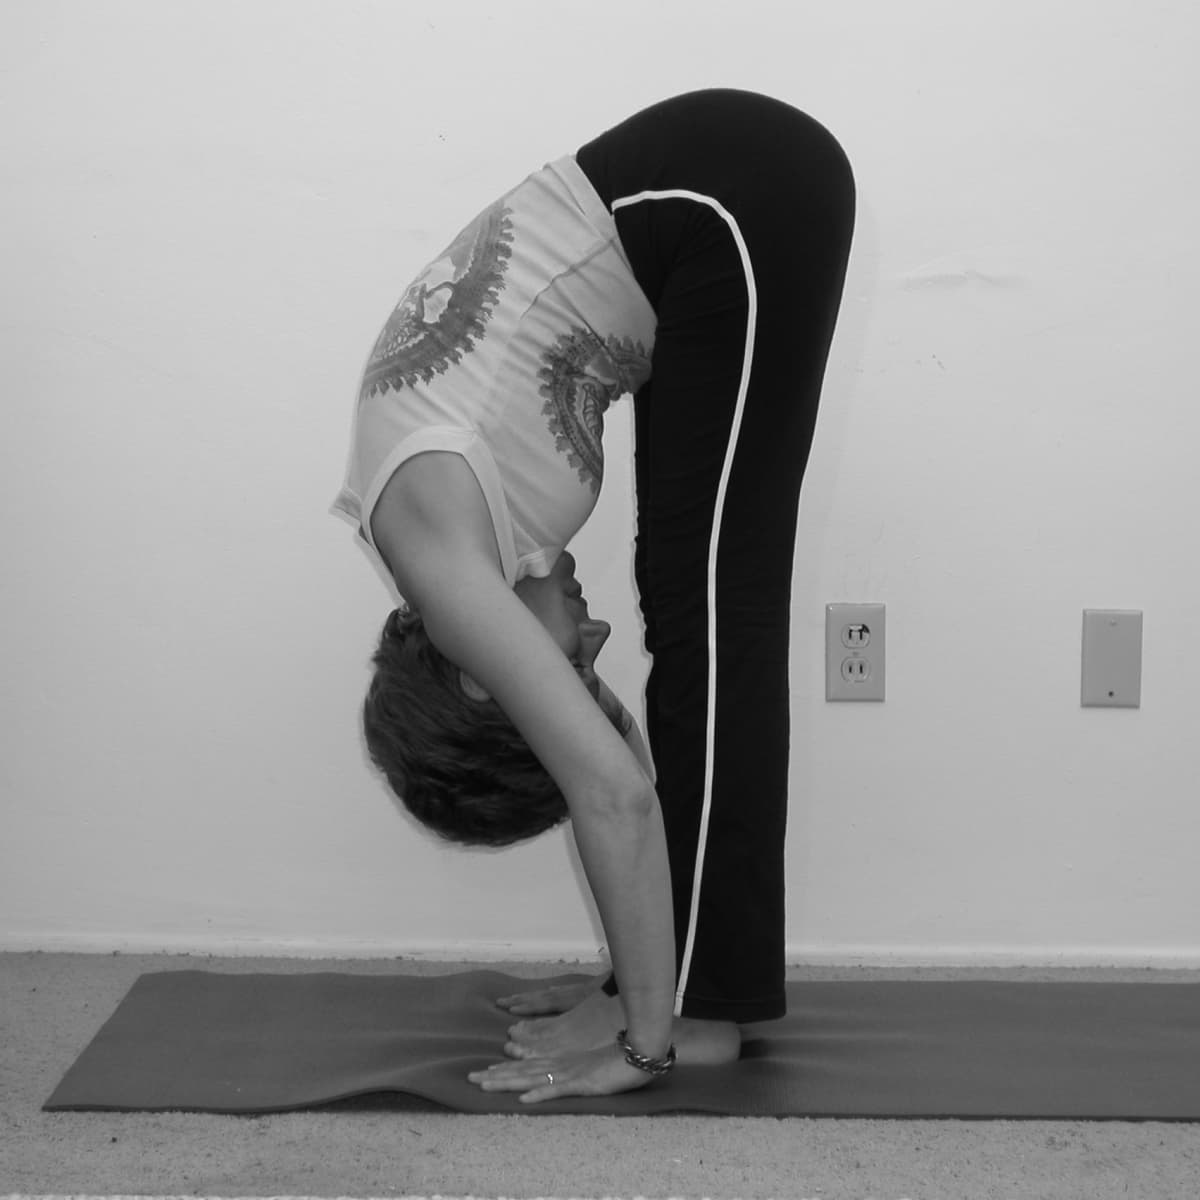 How to Do Head-to-Knee Pose (Janu Sirsasana)